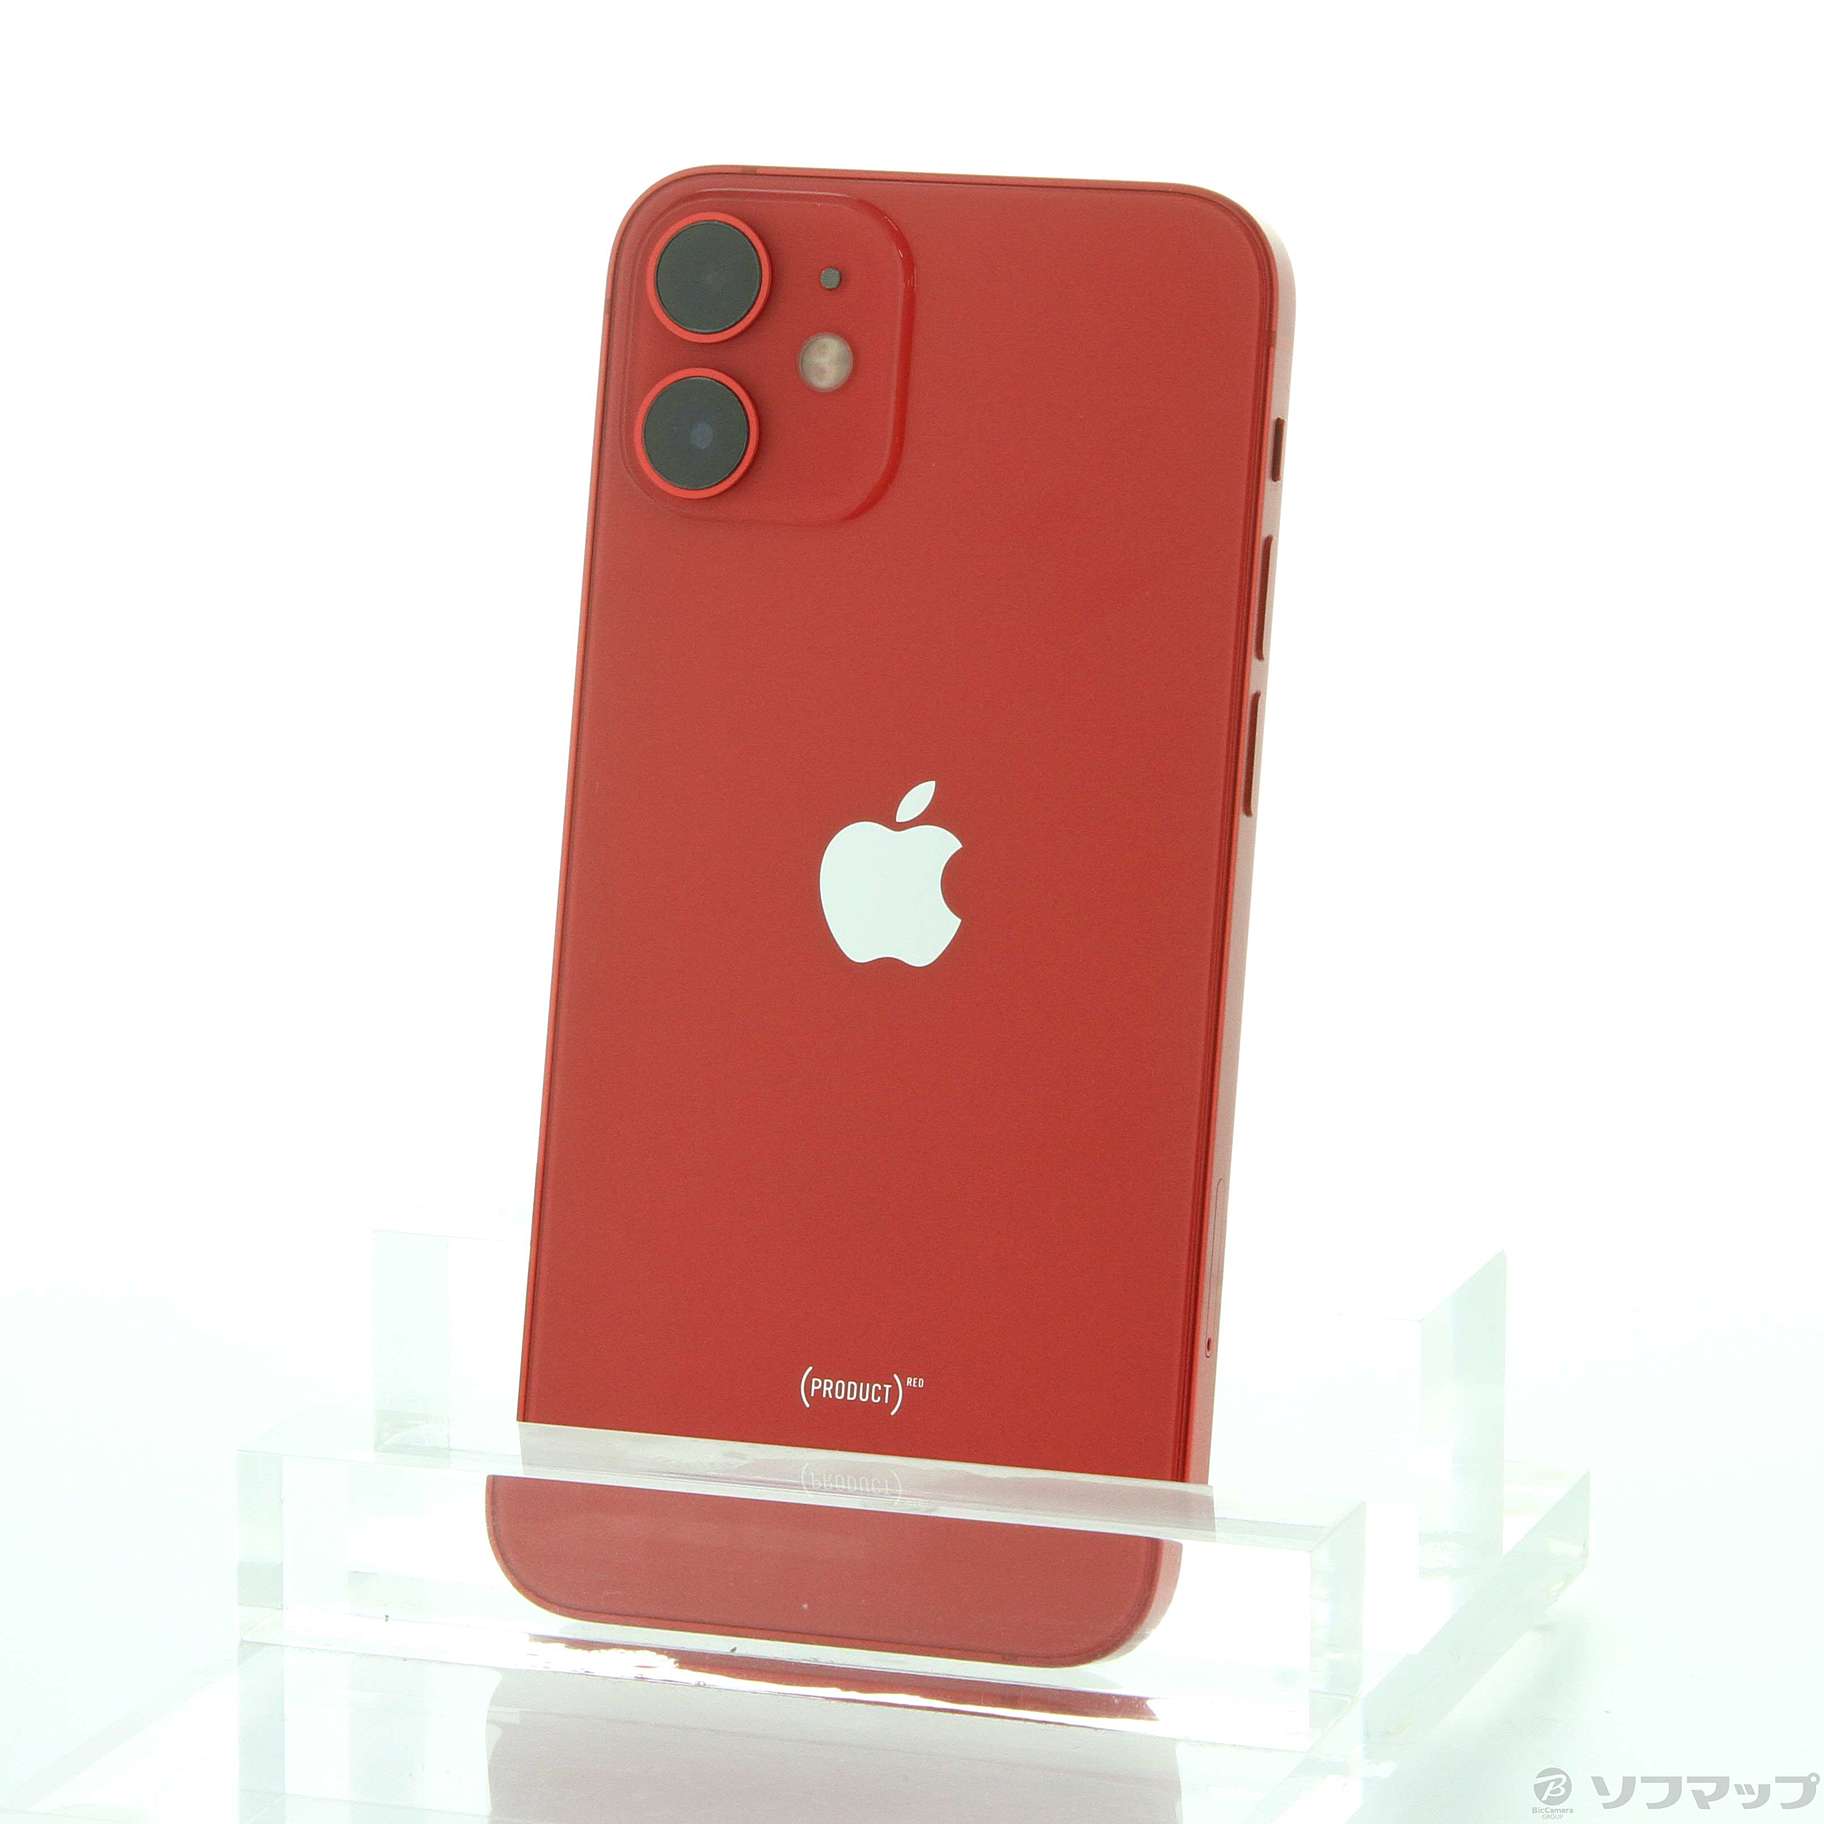 iPhone 12 mini プロダクトレッド 64 GB SIMフリー